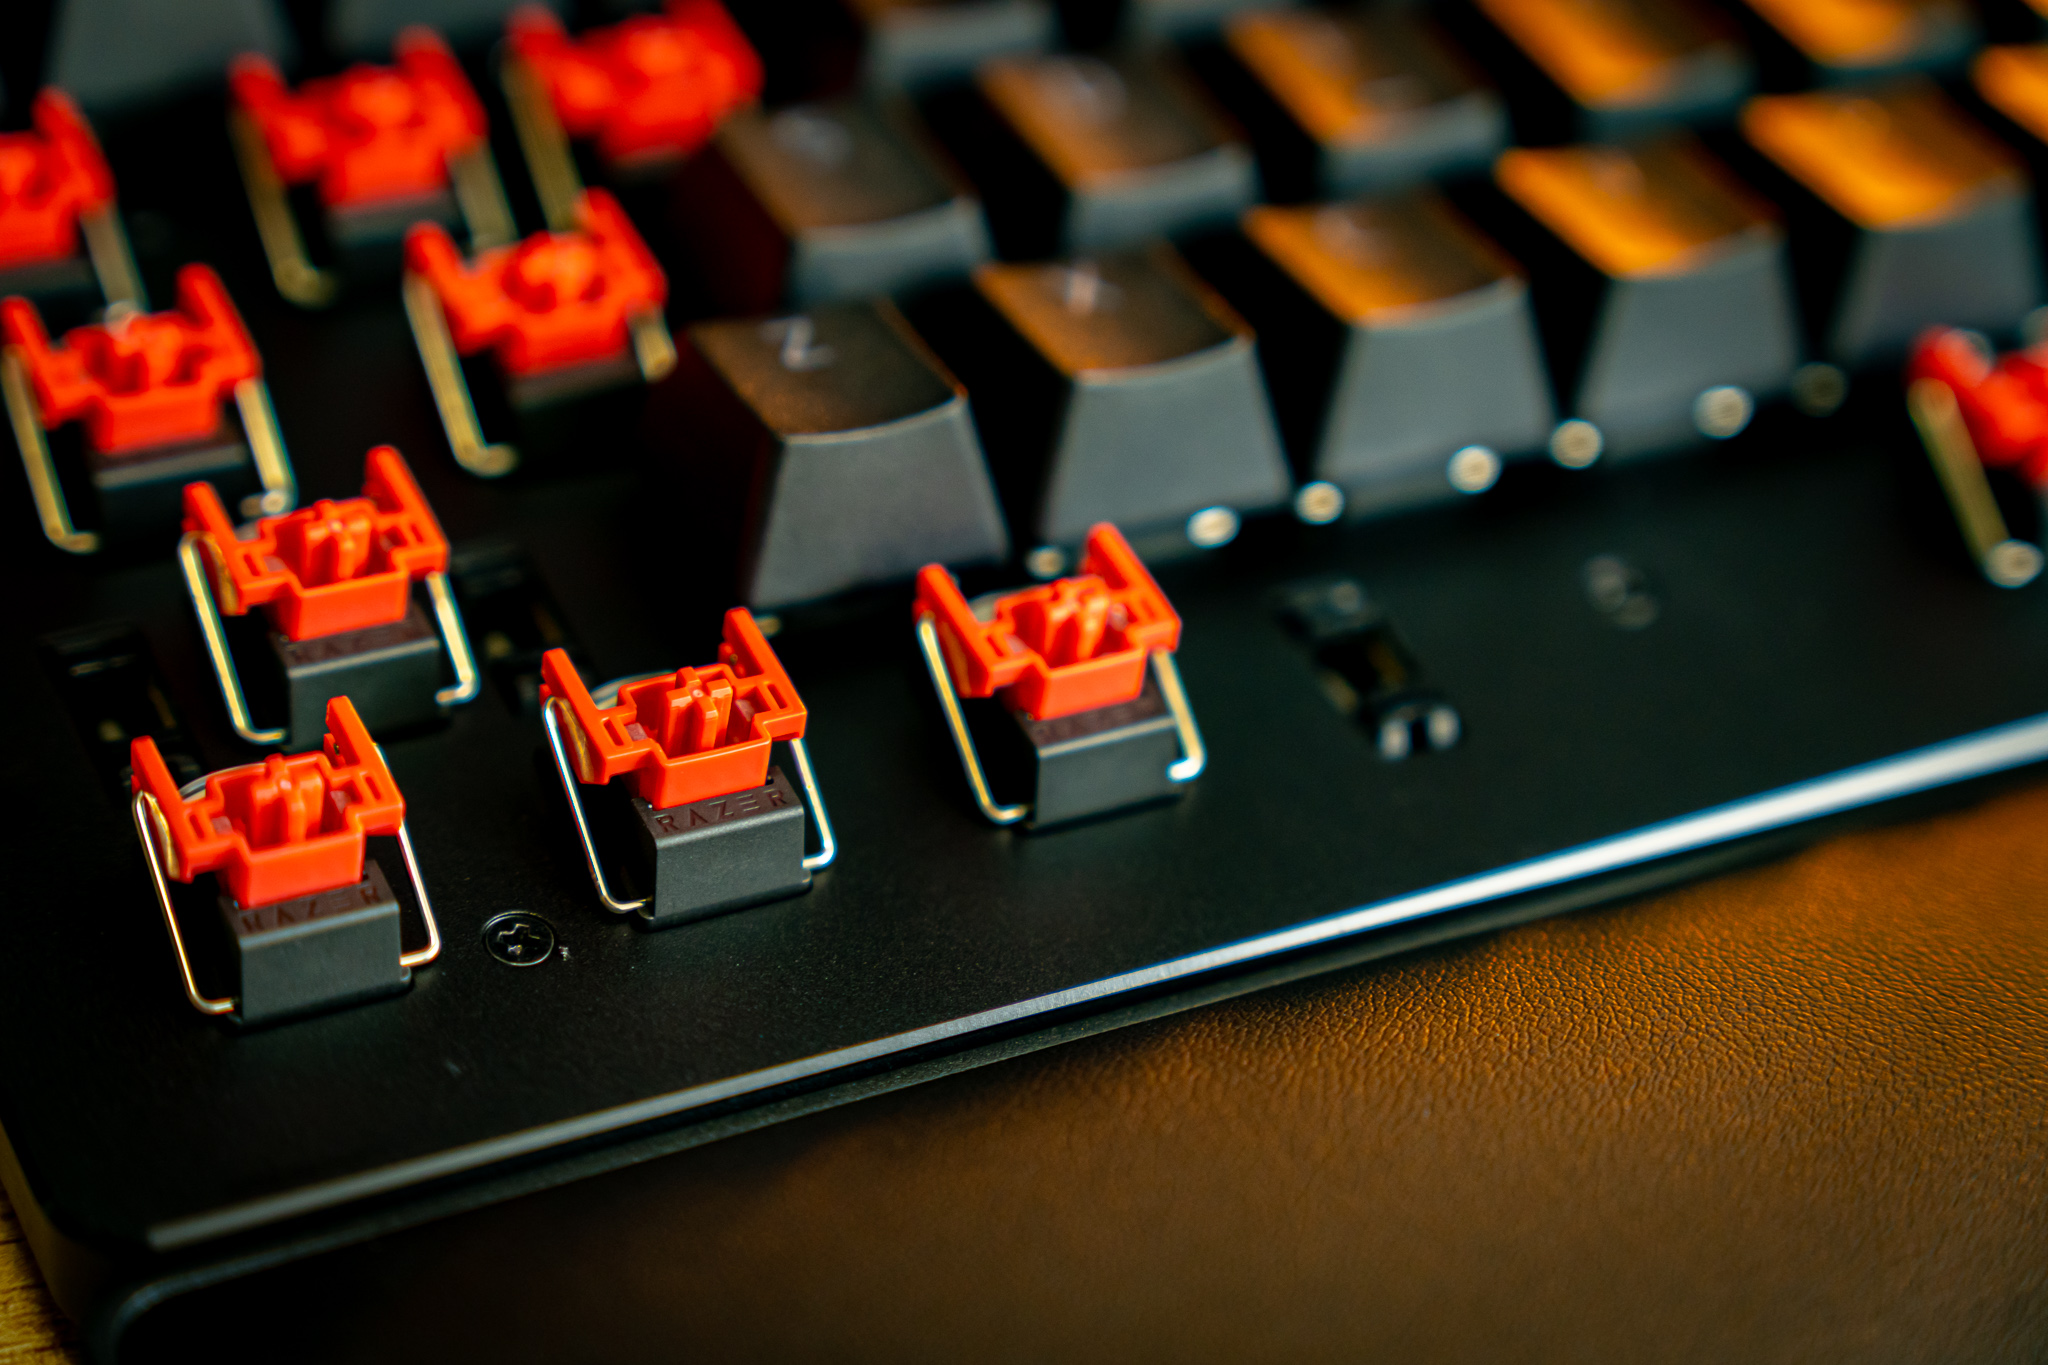 Razer Huntsman V2 Optical Linear Red Switch Wired Gaming Keyboard